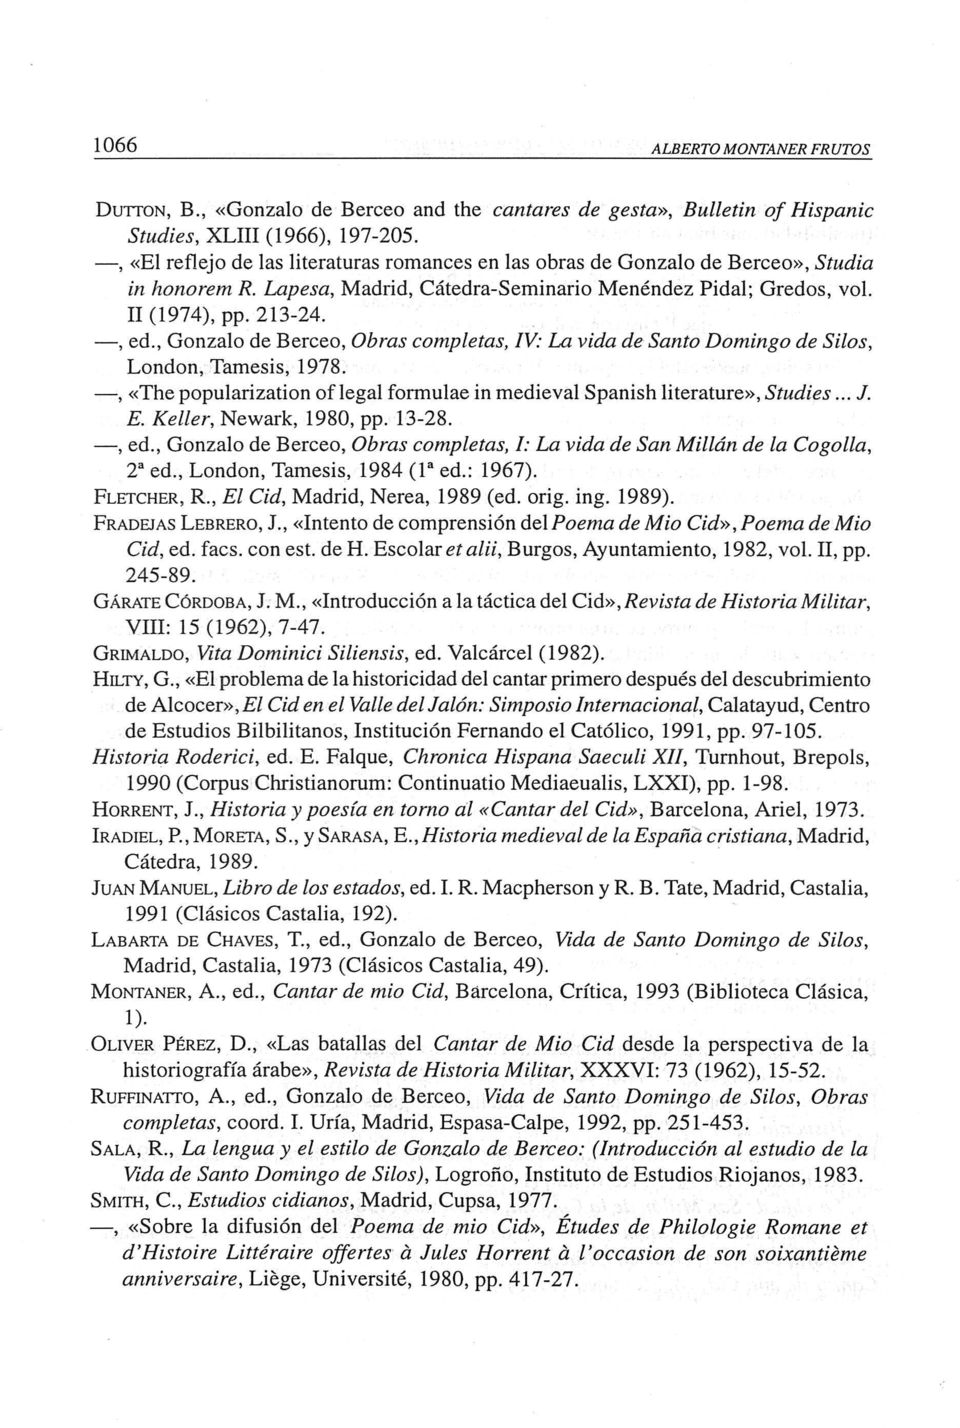 , Gonzalo de Berceo, Obras completas, IV: La vida de Santo Domingo de Silos, London, Tamesis, 1978., «The popularization of legal formulae in medieval Spanish literature». Studies...J. E.